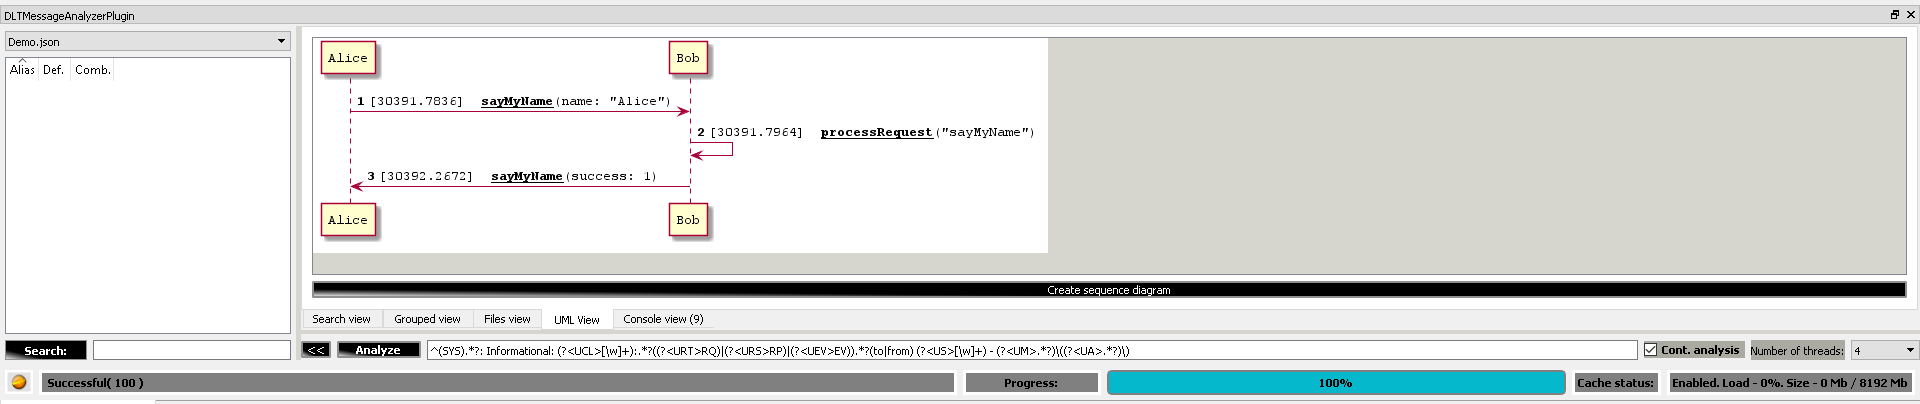 Screenshot of DLT Message Analyzer plugin - UML view